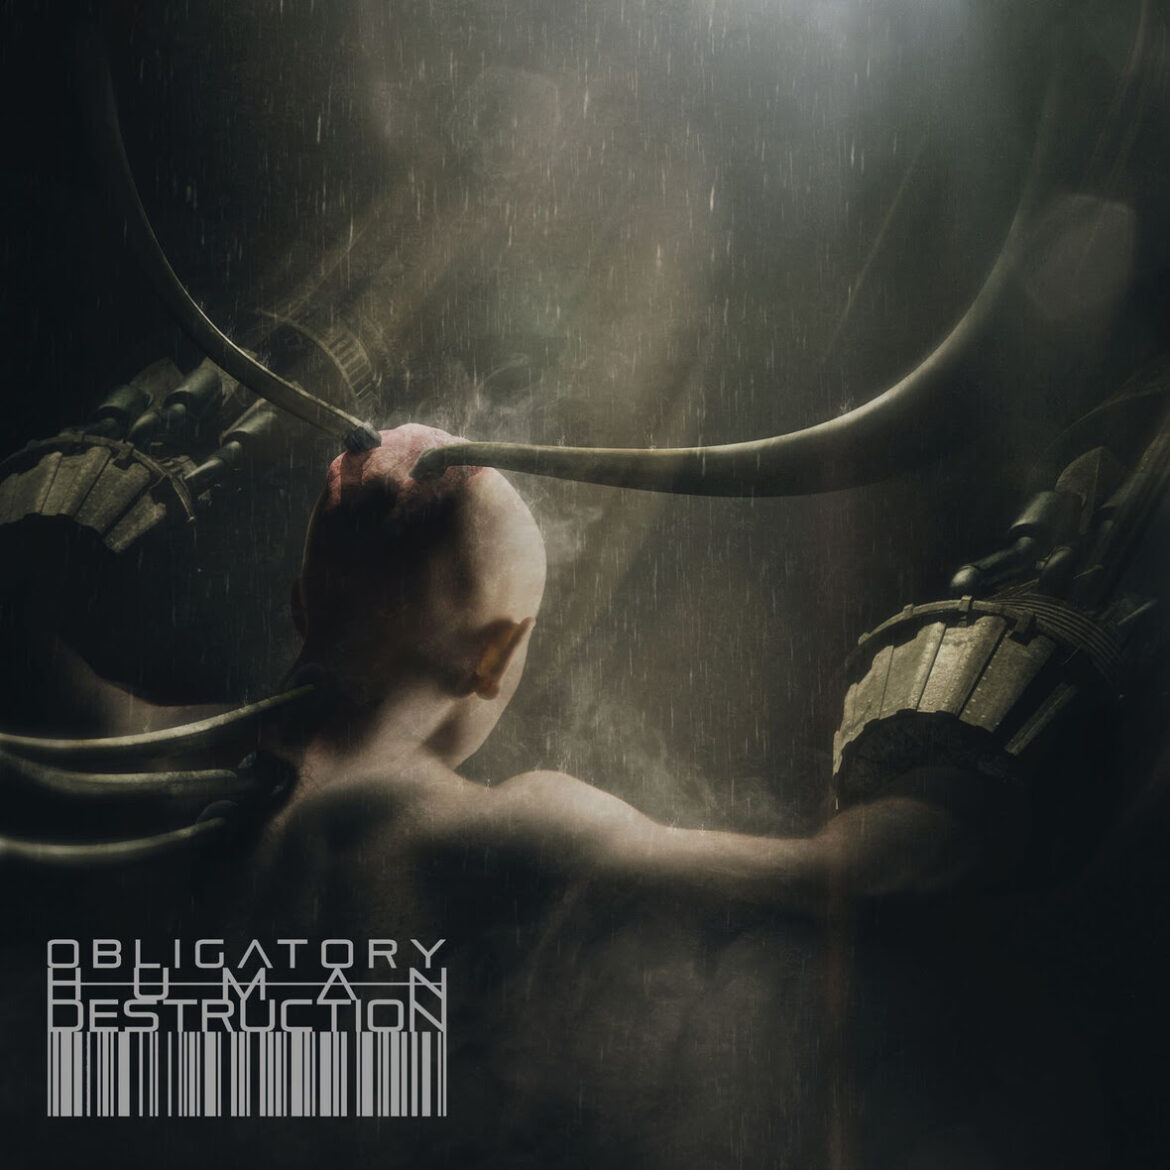 OBLIGATORY HUMAN DESTRUCTION – Release Self-Titled Album